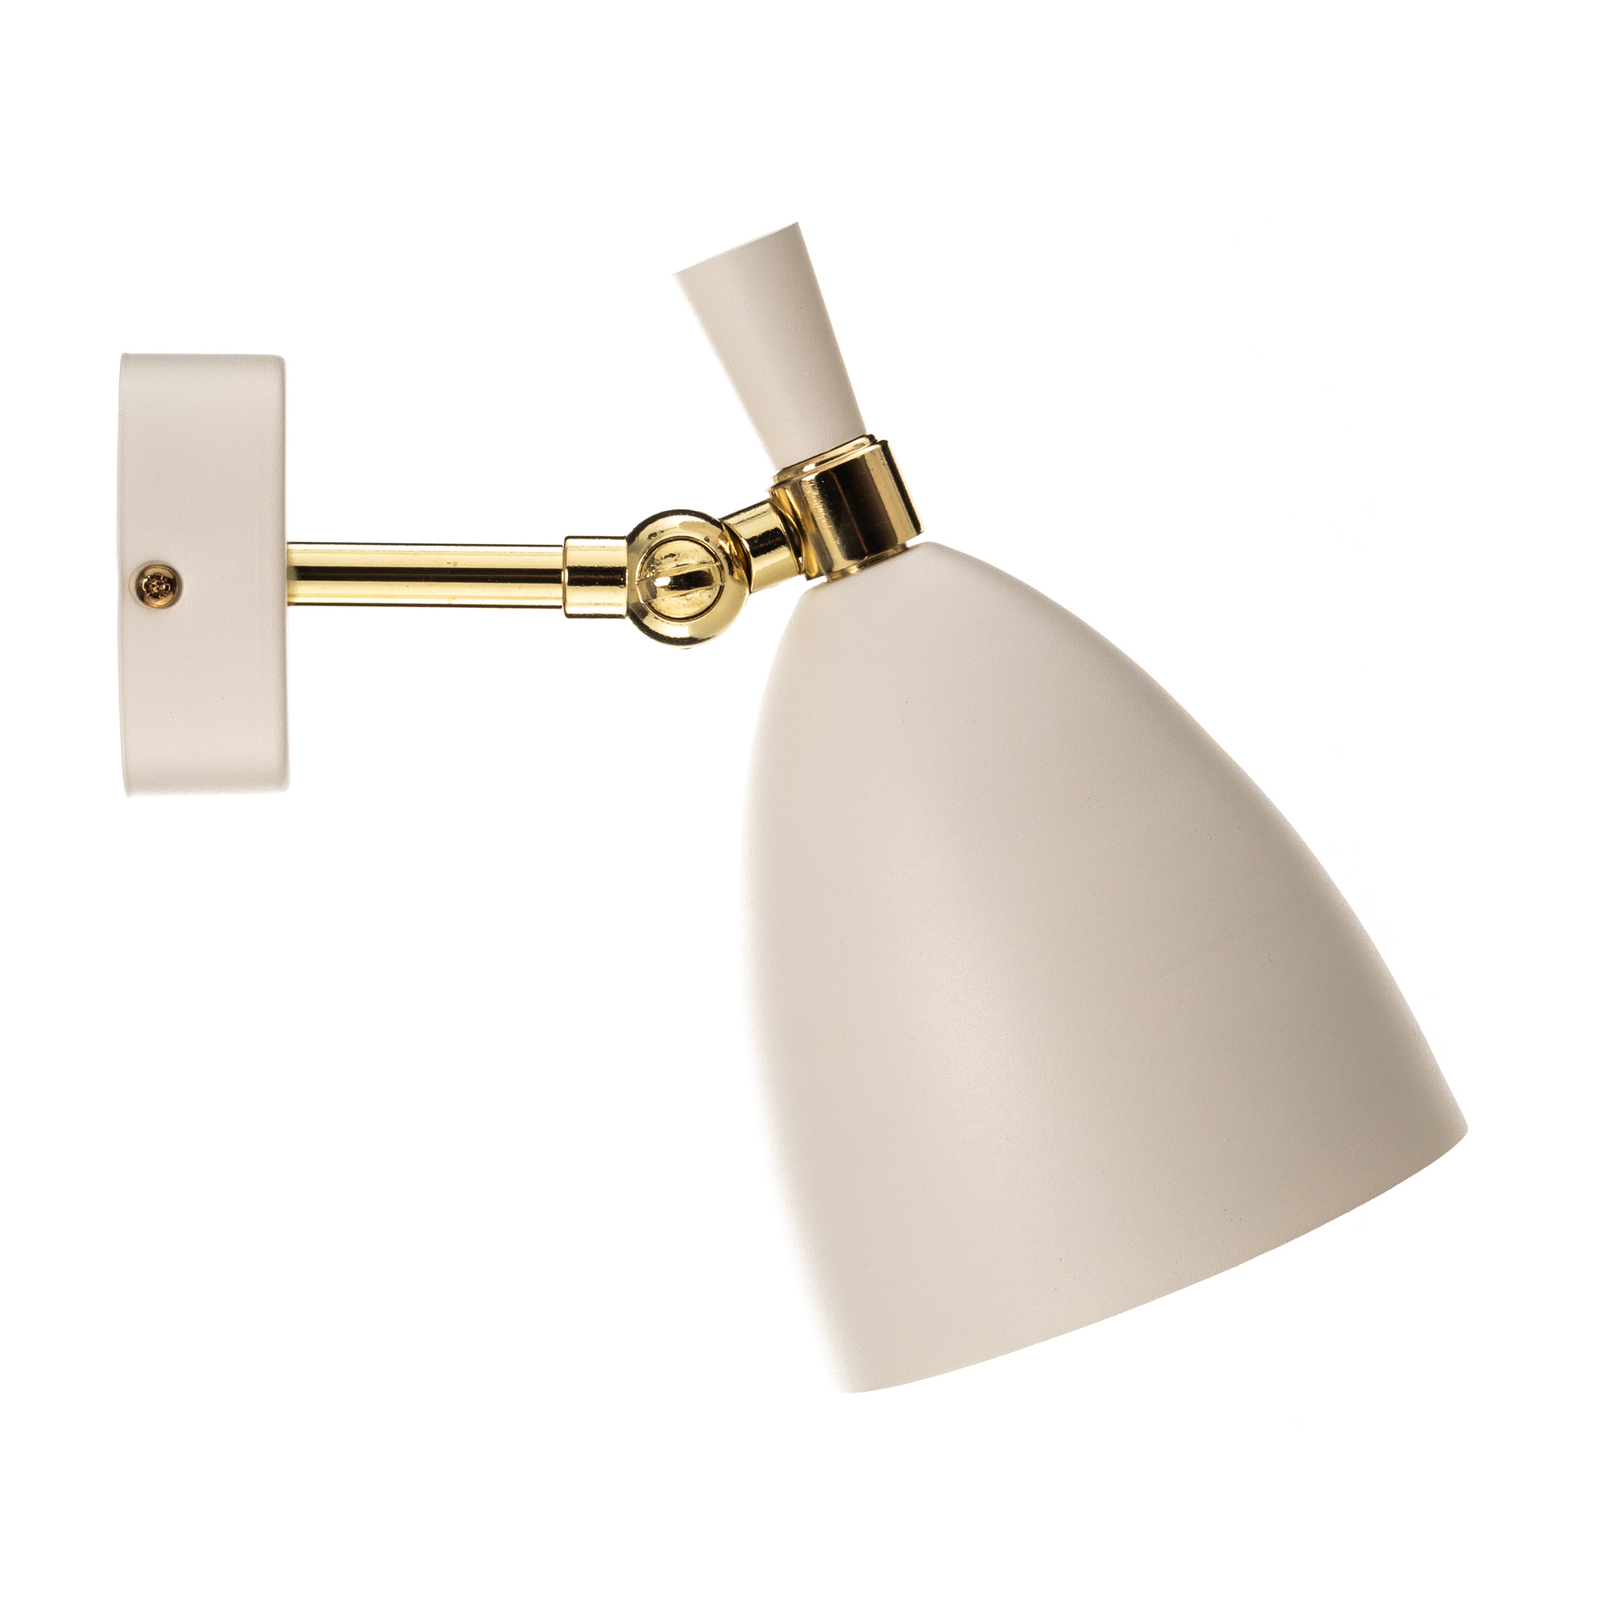 Cyntia wall light, pivotable, white and brass